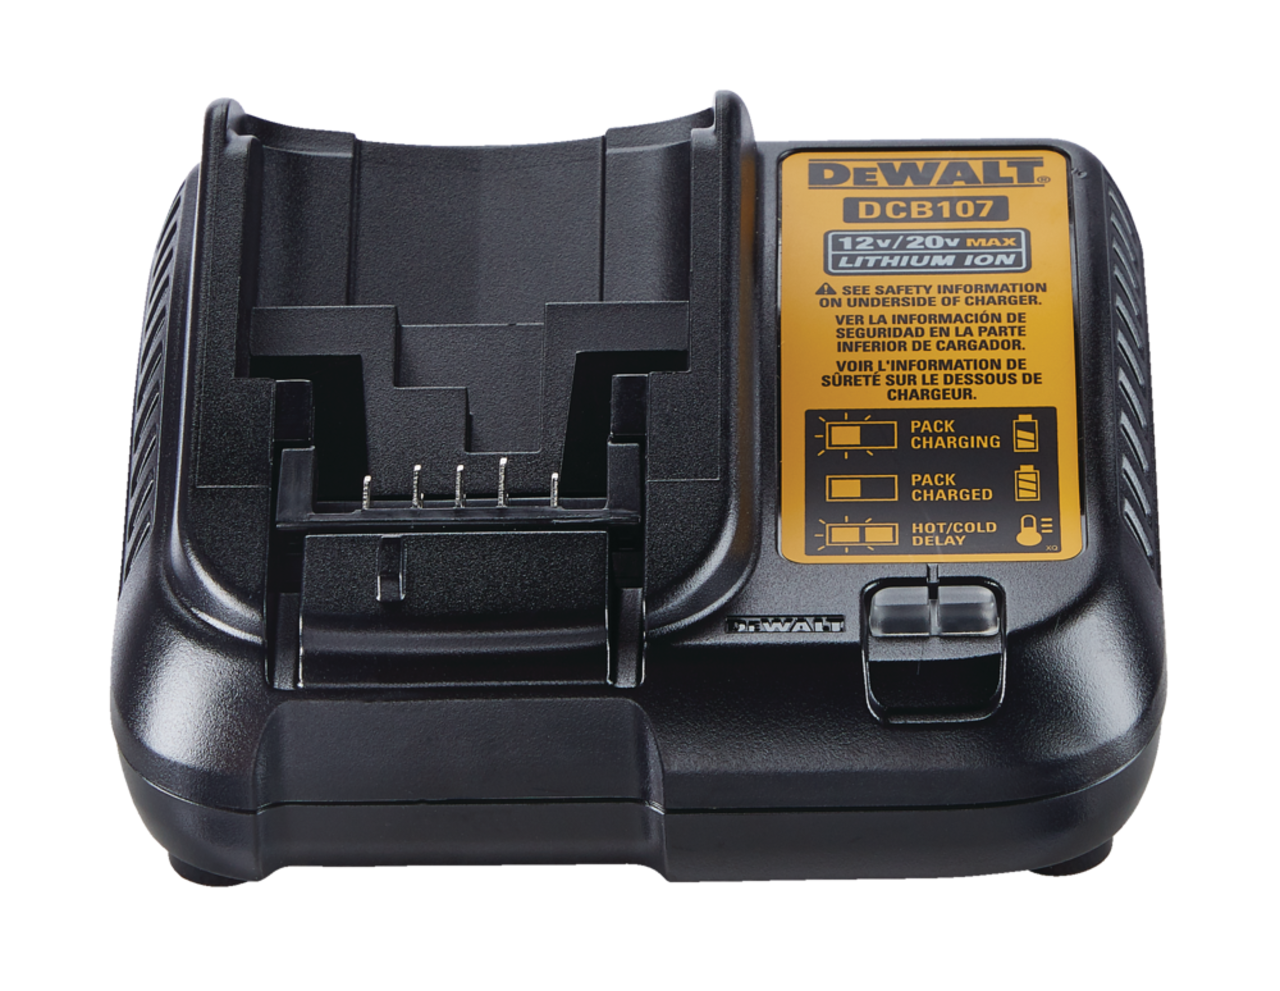 DEWALT DCK277C2 20V MAX Brushless Cordless Compact Drill/Driver